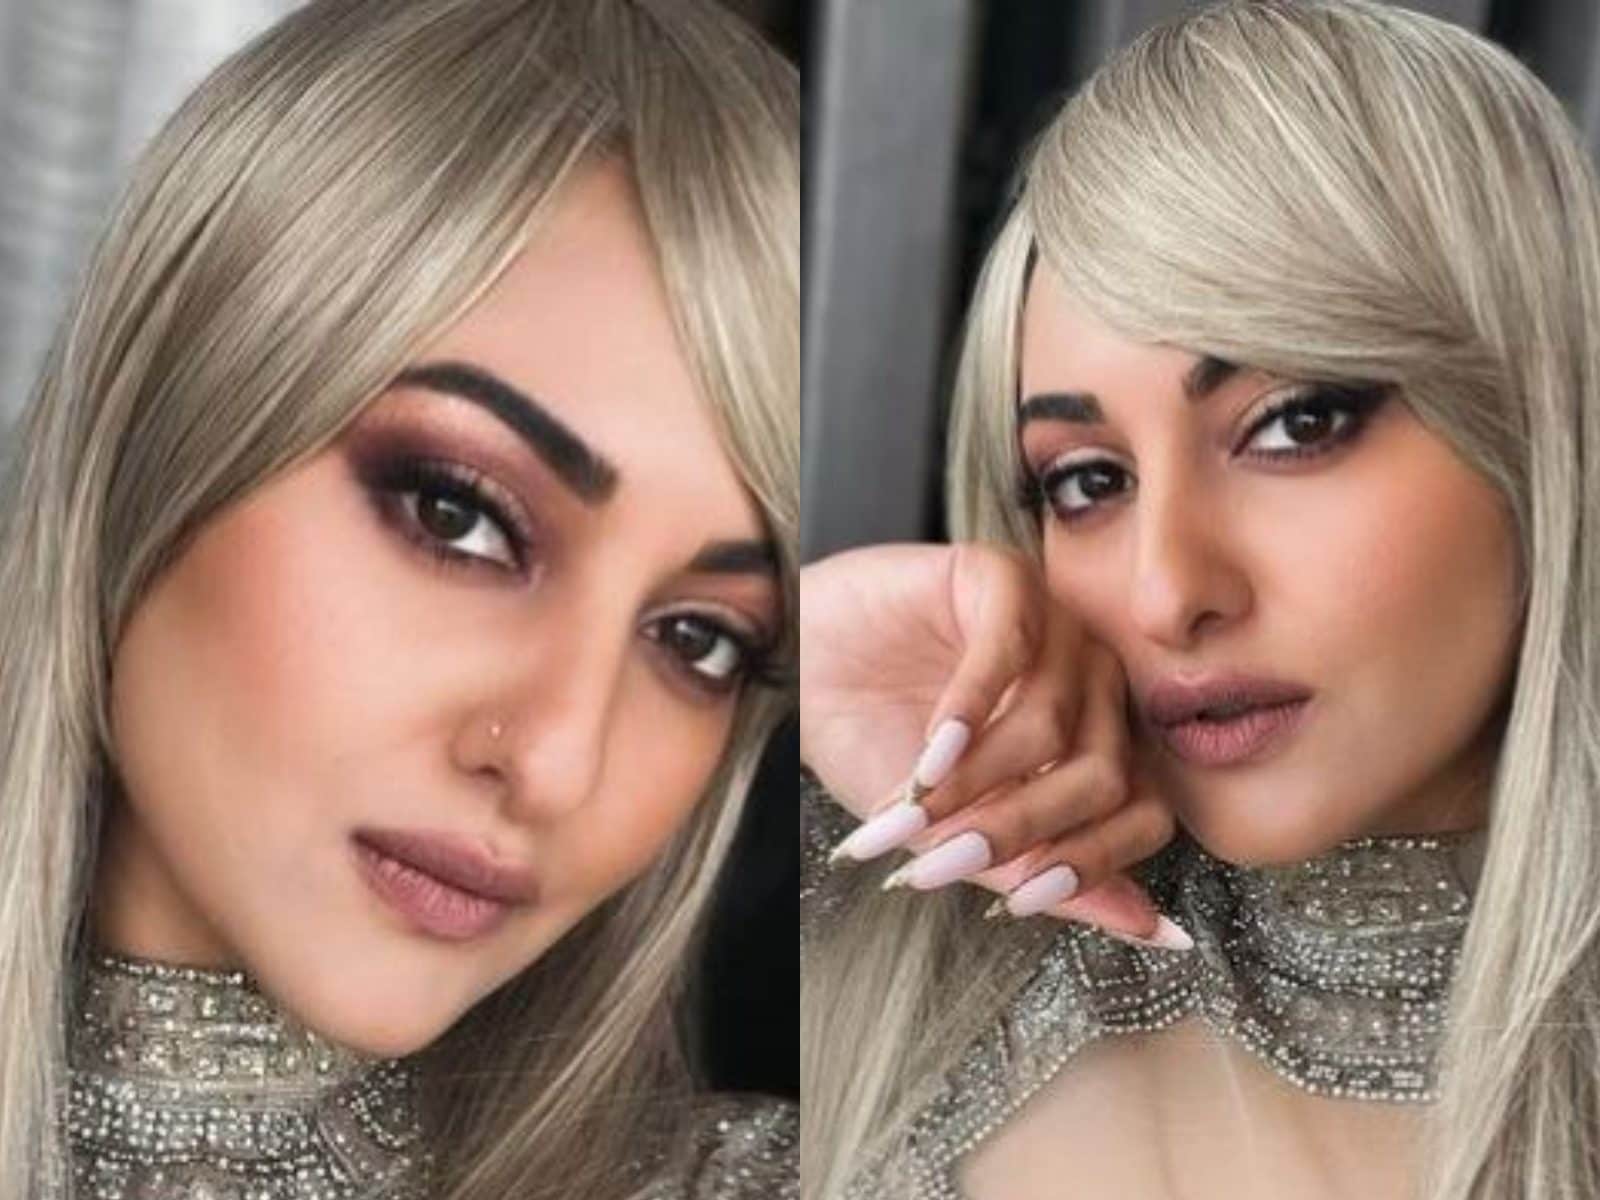 Sonakshi Sinha Blue Film Sex Videos - Sonakshi Sinha Flaunts Her Look in Blonde Hair in Latest Instagram Post,  See Pics - News18